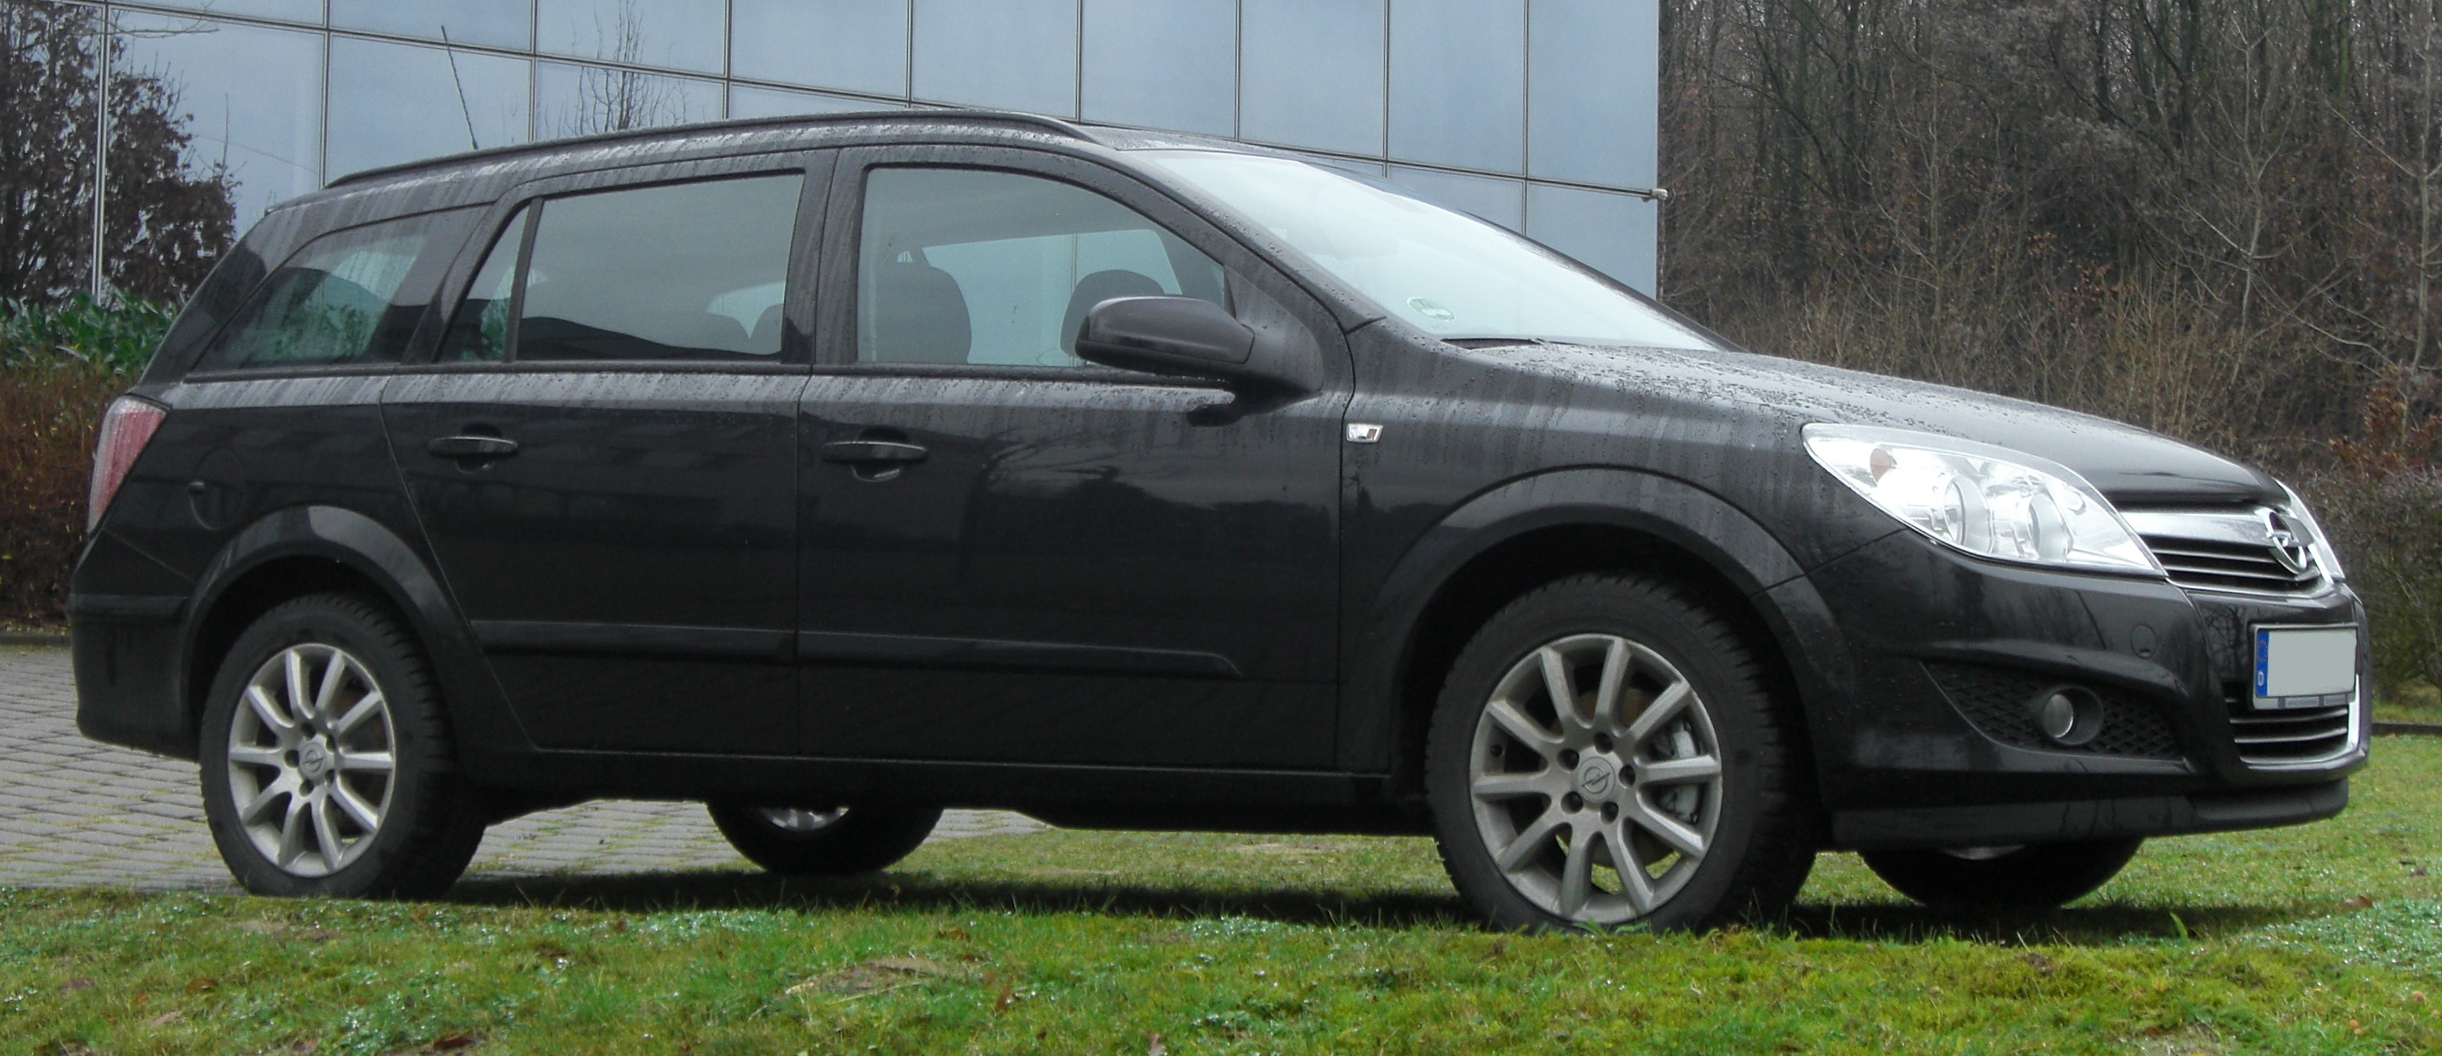 Opel Astra 14 Caravan